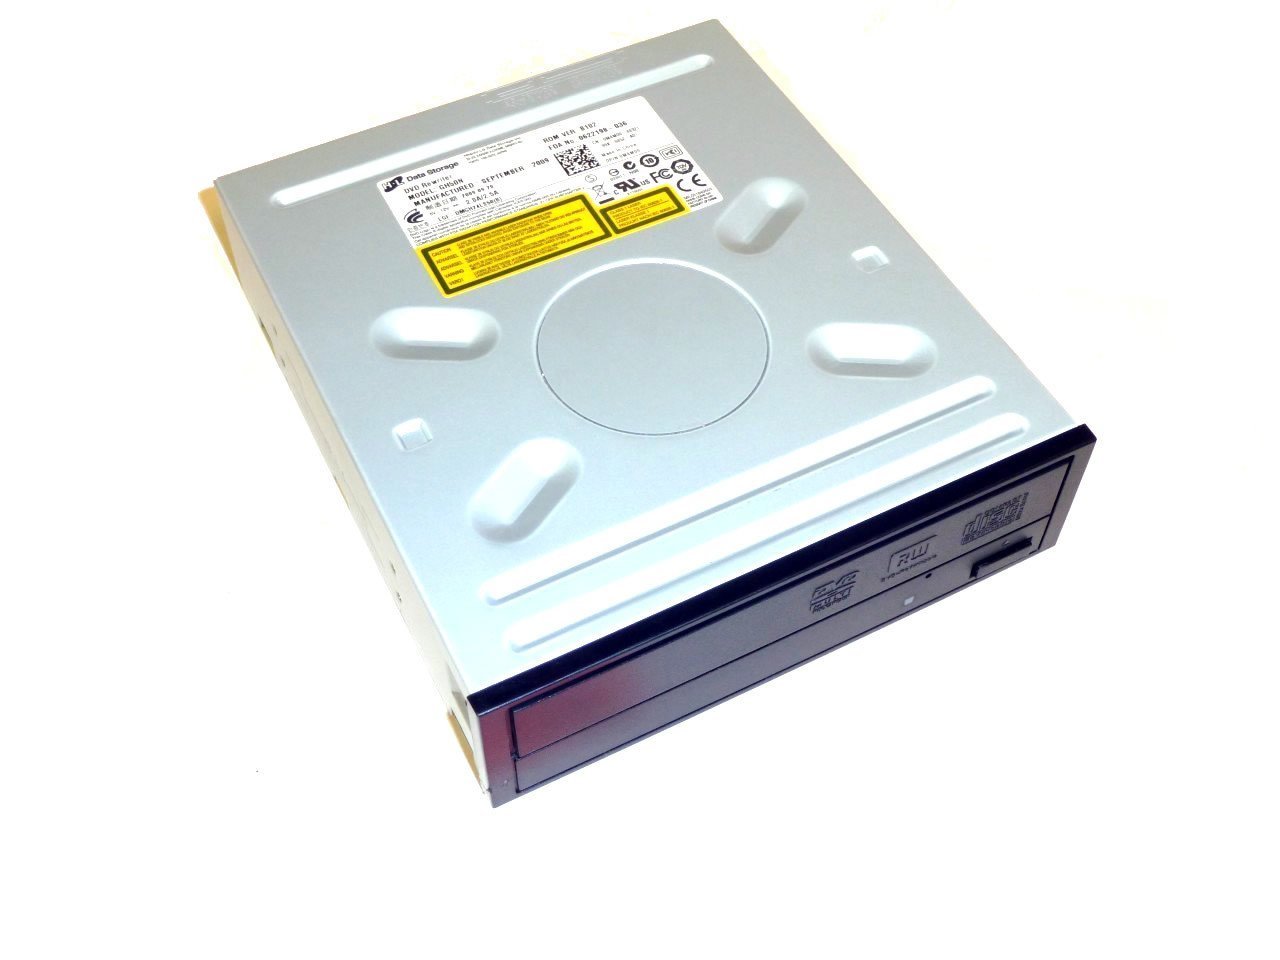 Dell Optiplex/Dimension/Inspiron 16x DVD+/-RW SATA Optical Drive- M4M08